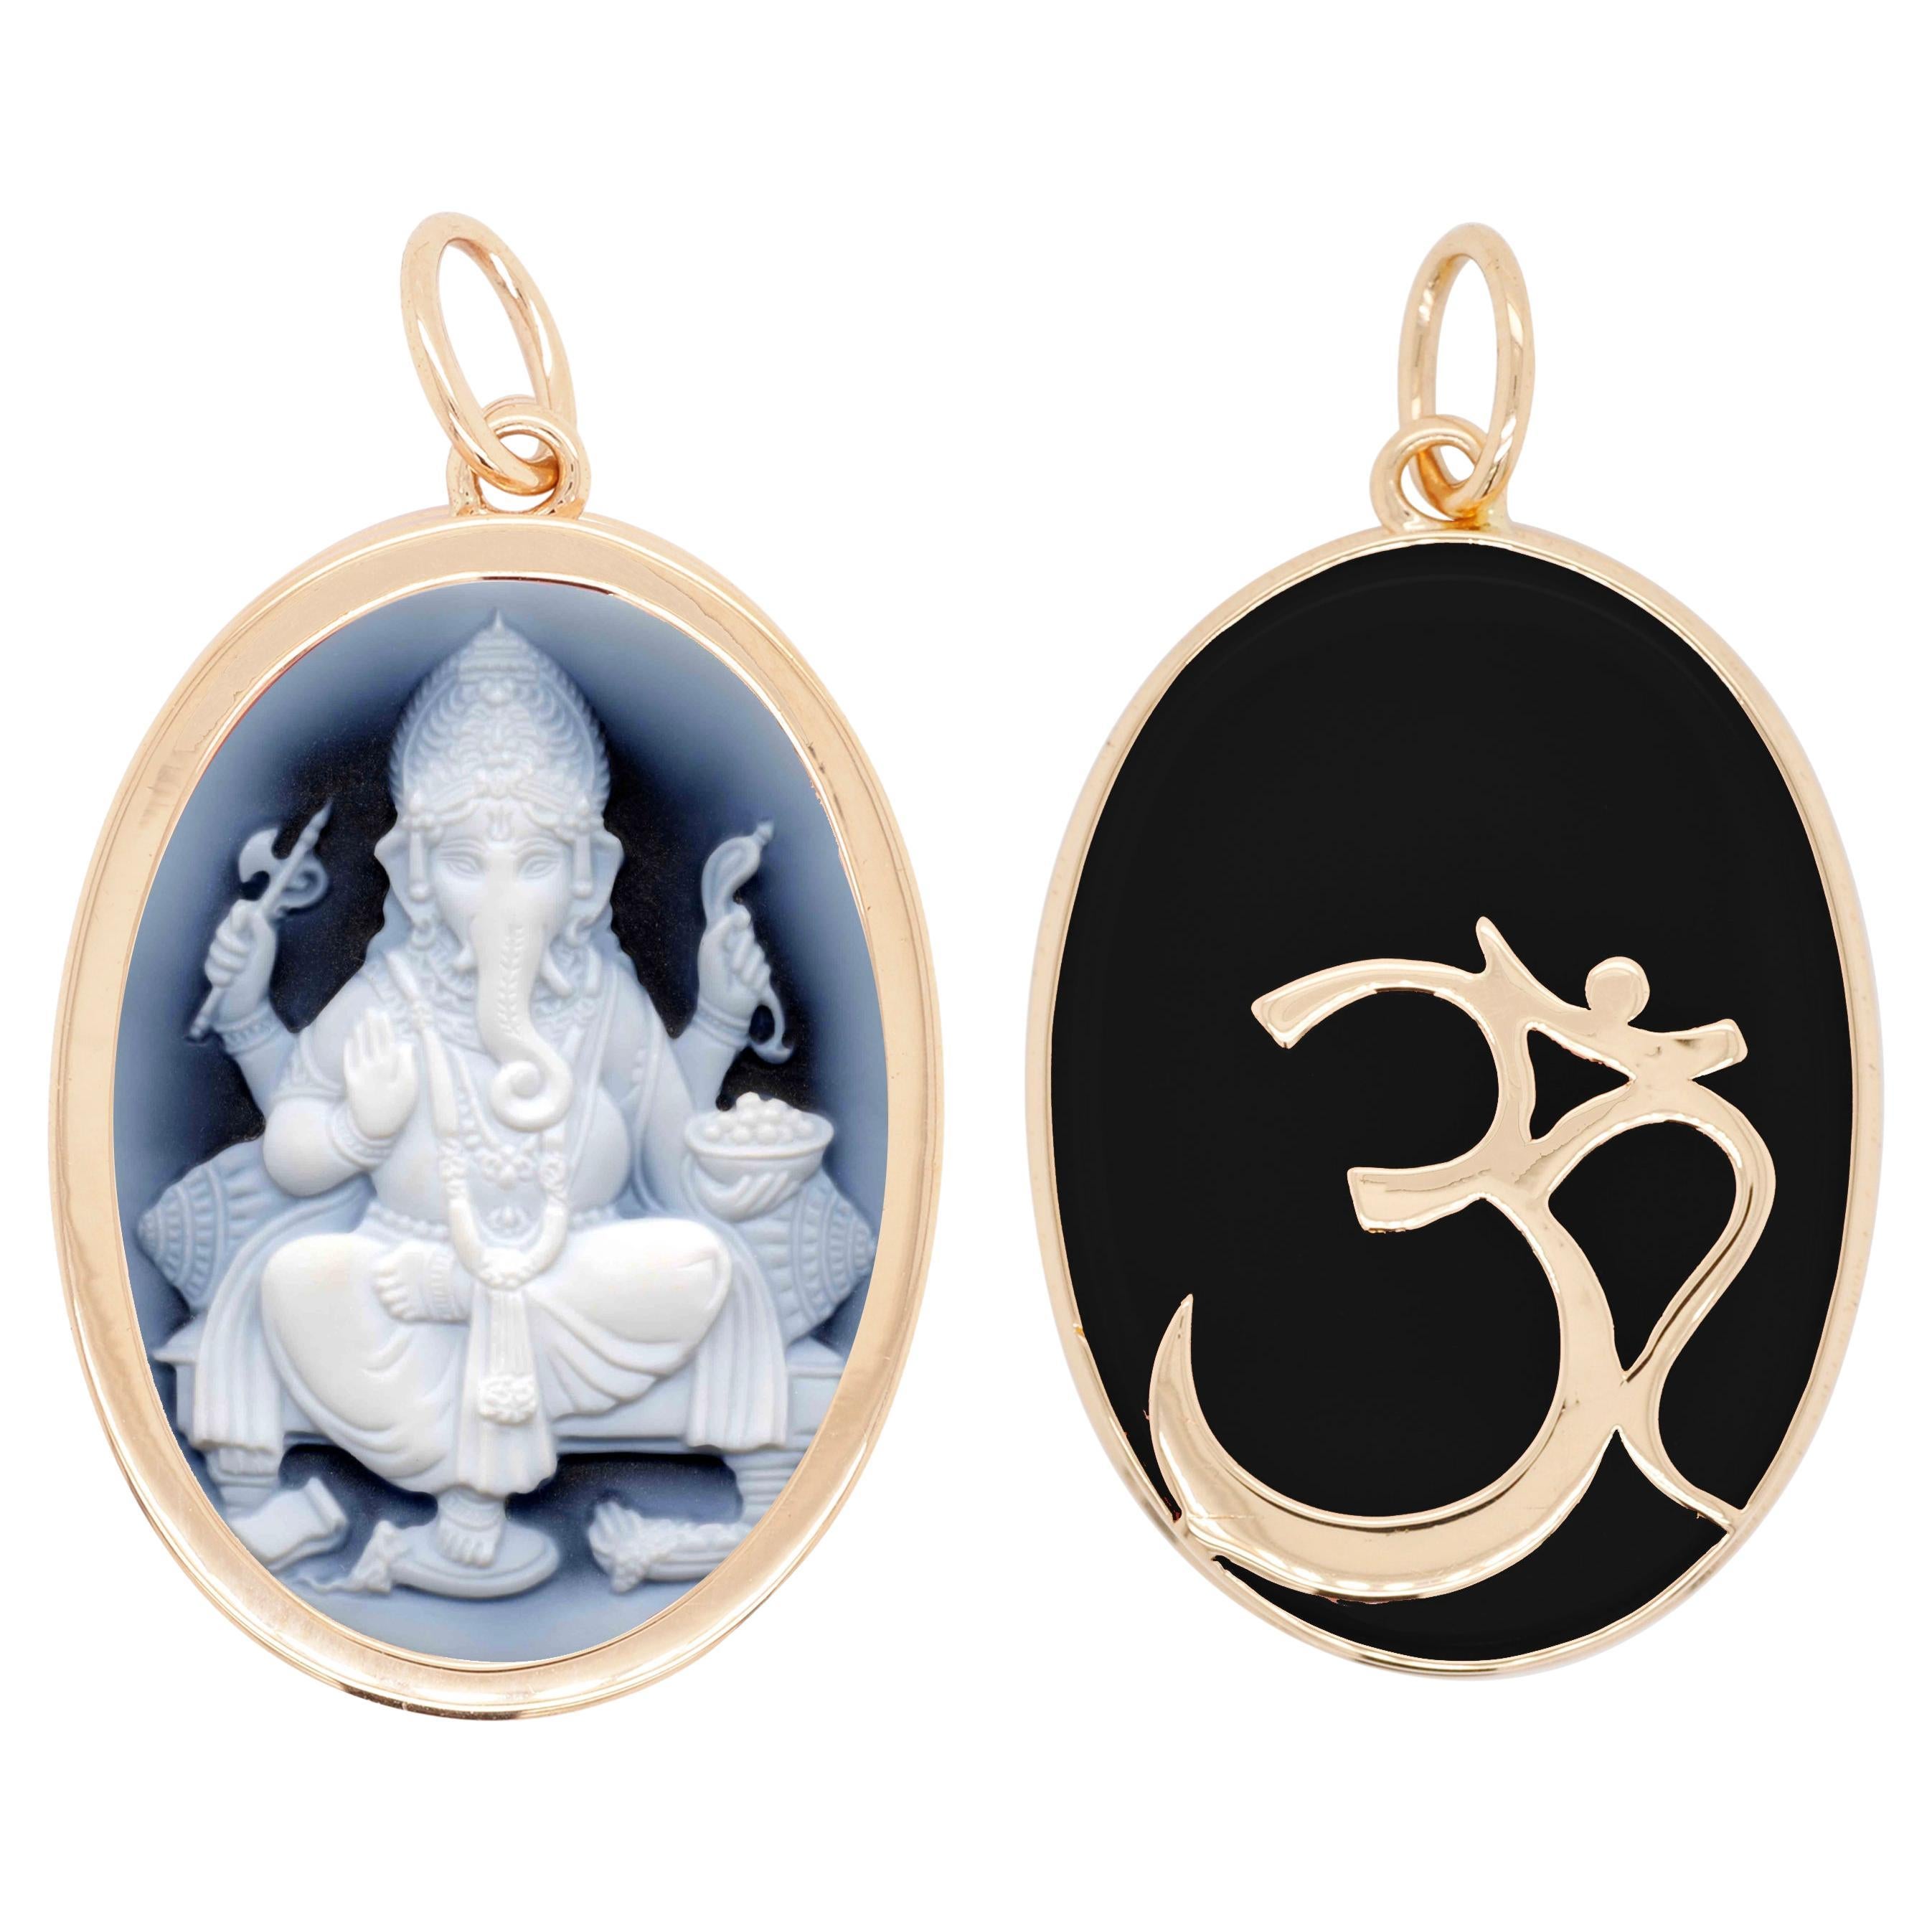 Collier pendentif réversible Ganesha Cameo Om en or jaune 14 carats et agate